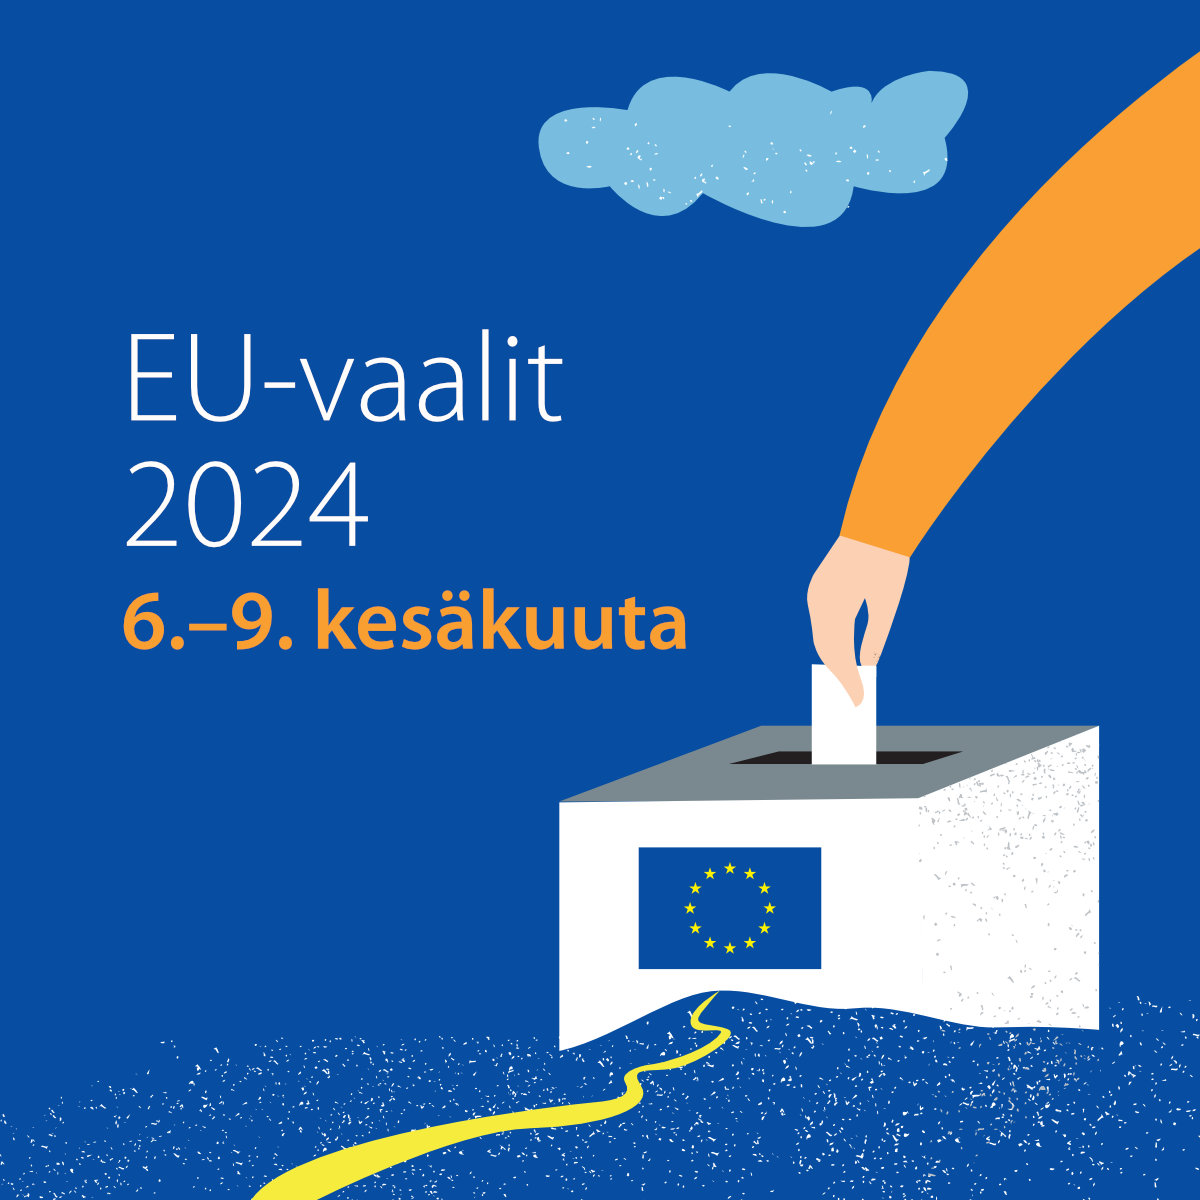 EU-vaalit 2024 - Square.jpg